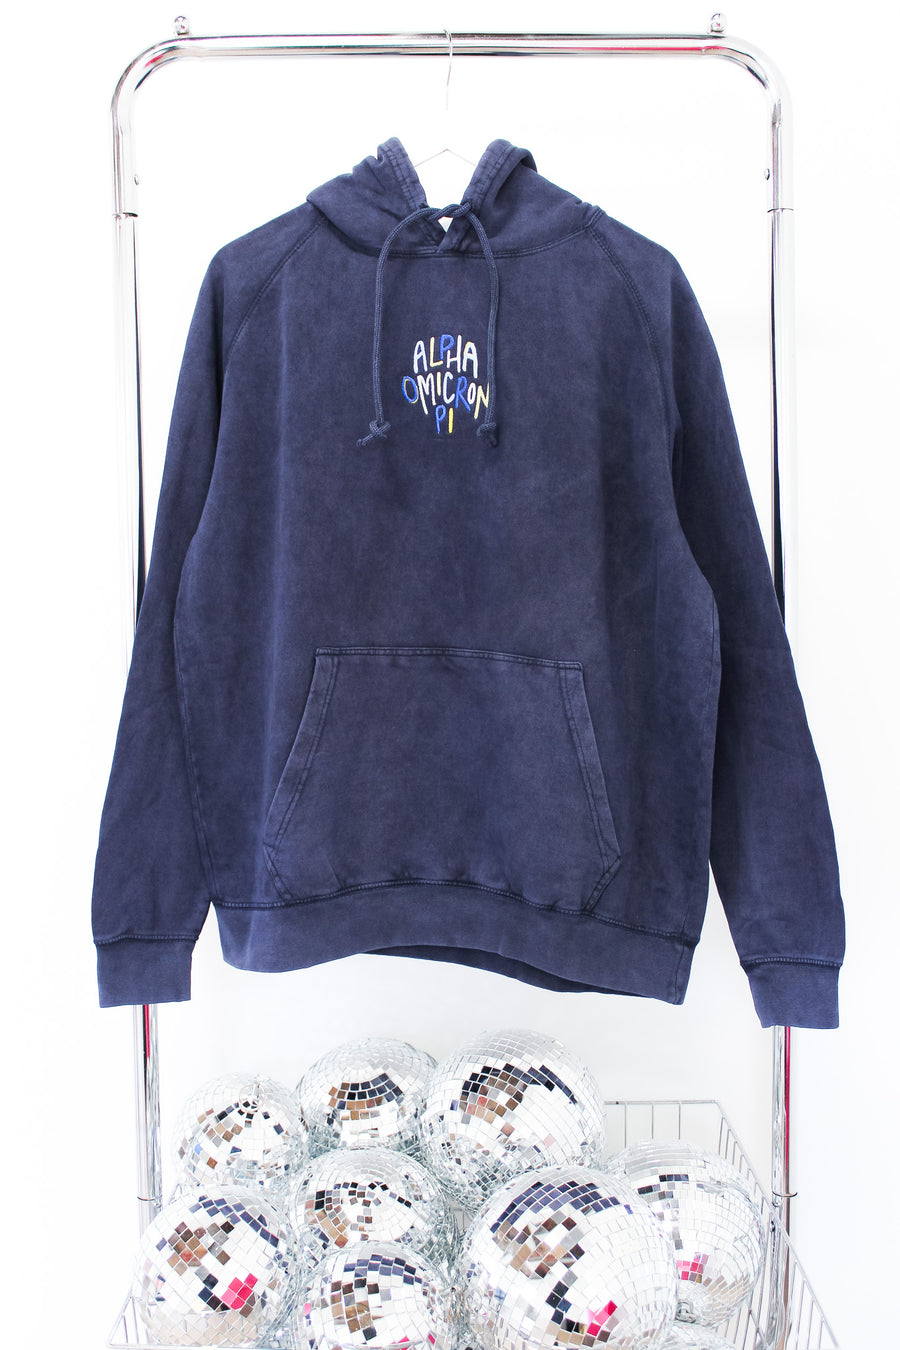 Alpha Omicron Pi Embroidered Sweatshirt - LG BLUE JEAN